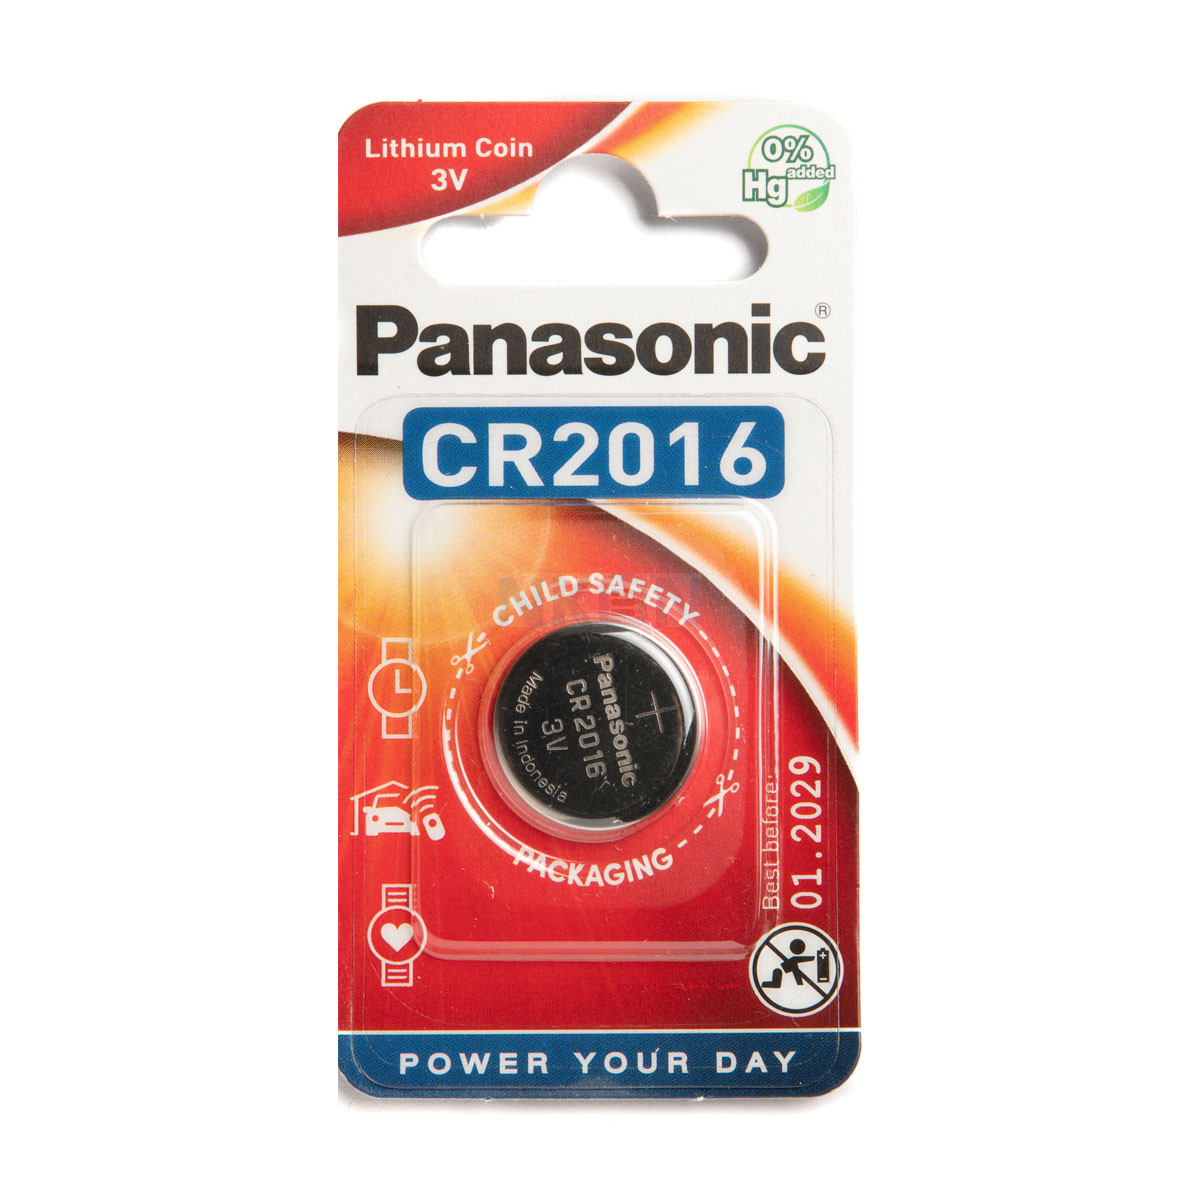 Panasonic CR-2016